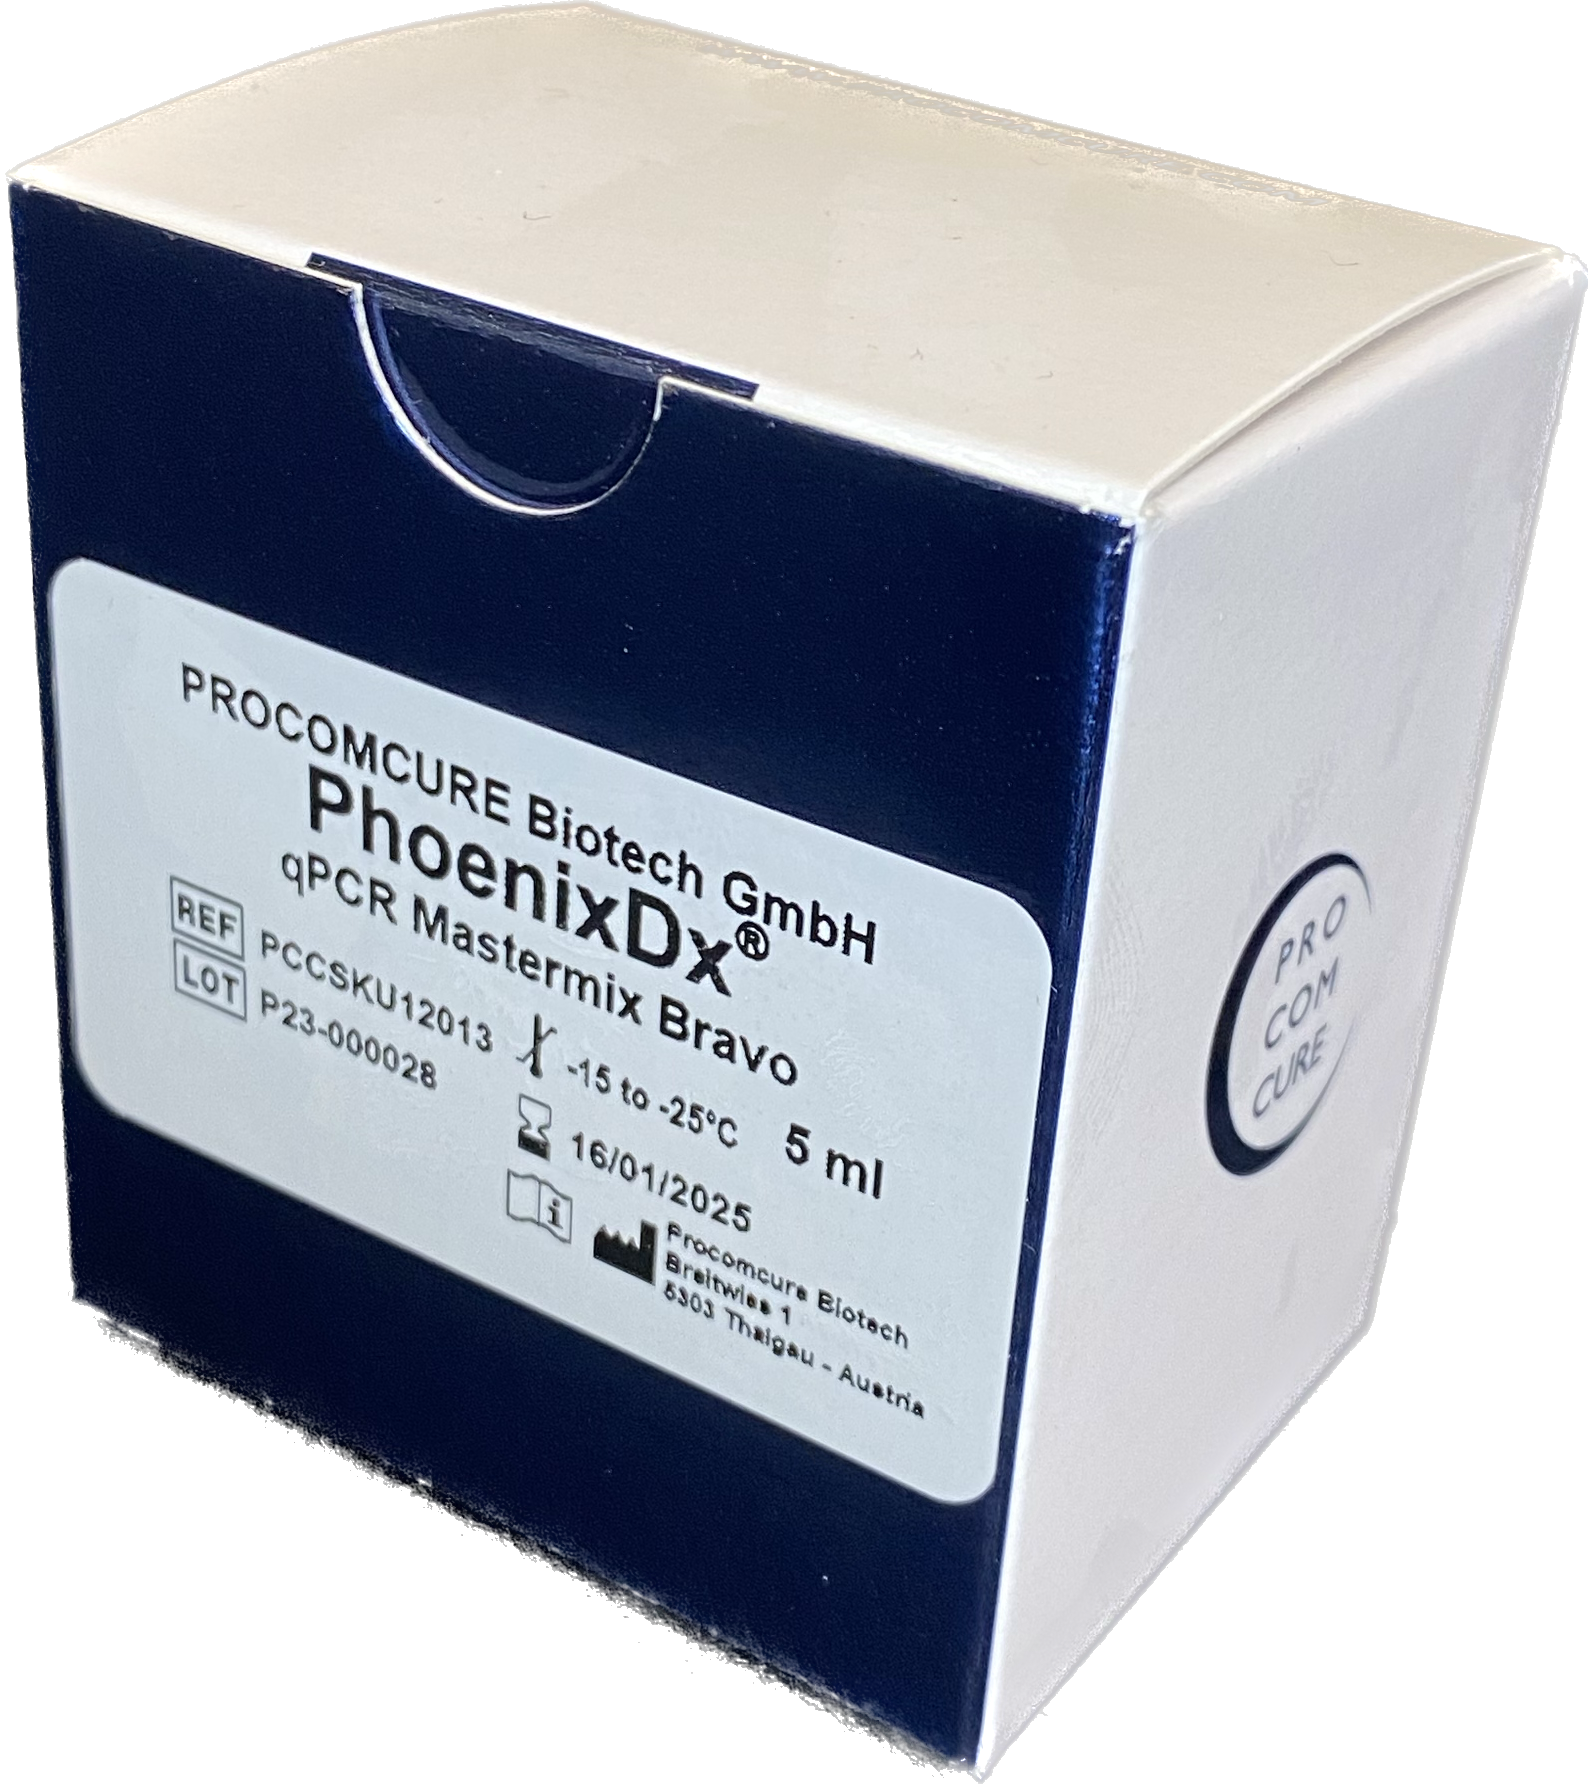 PhoenixDx® Bravo Mastermix (5 mL, ABC)